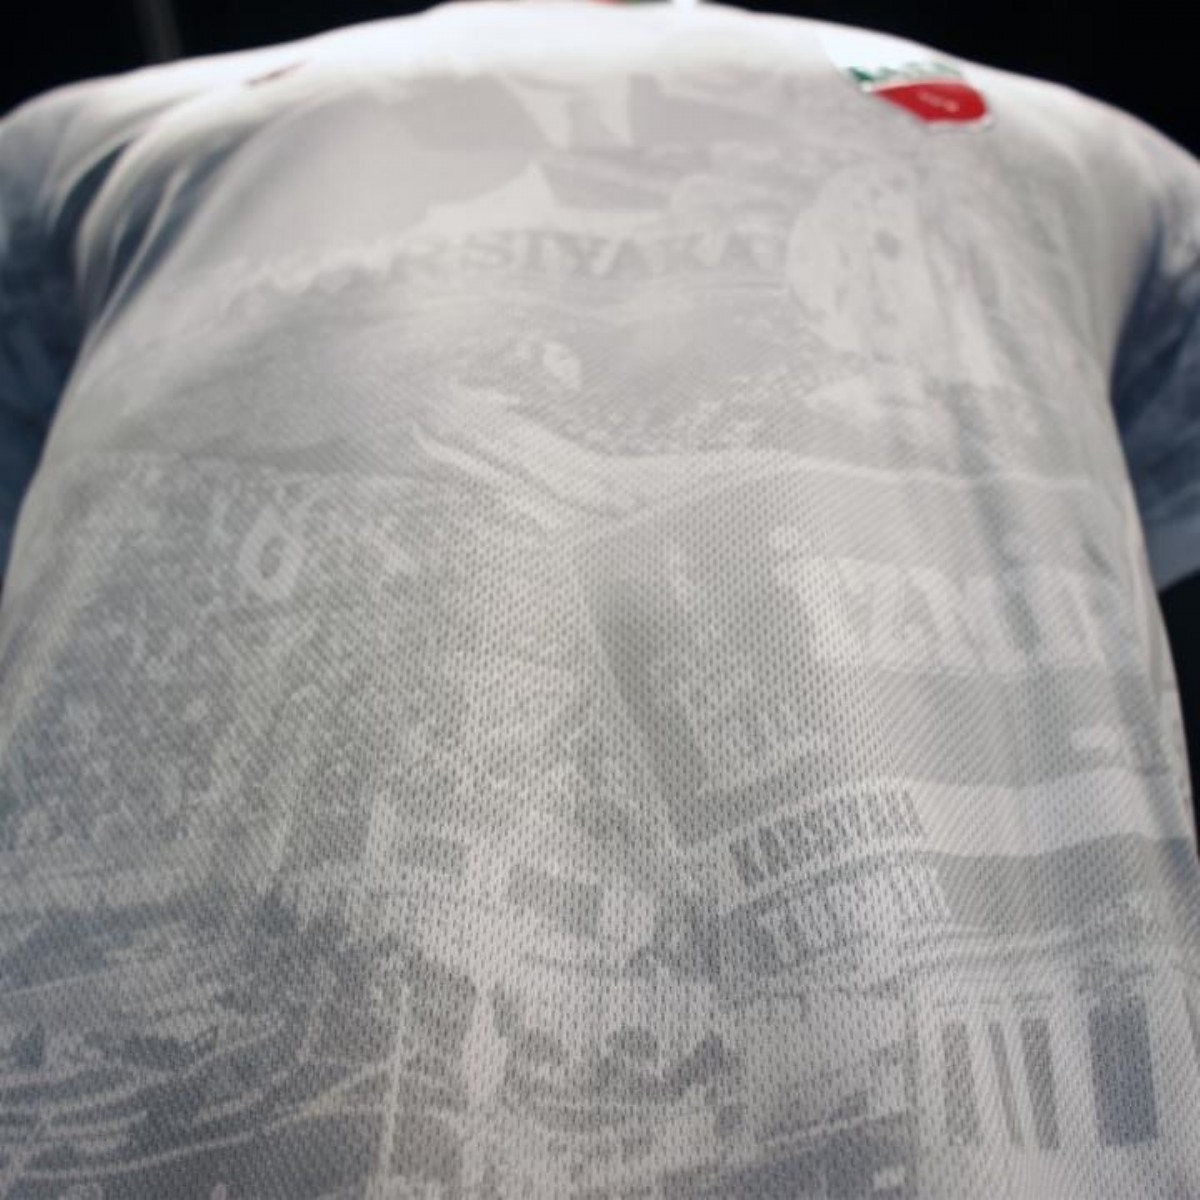 T-Shirt & Polo | ATATÜRK BEYAZ FORMA | 1912191217938 |  | 